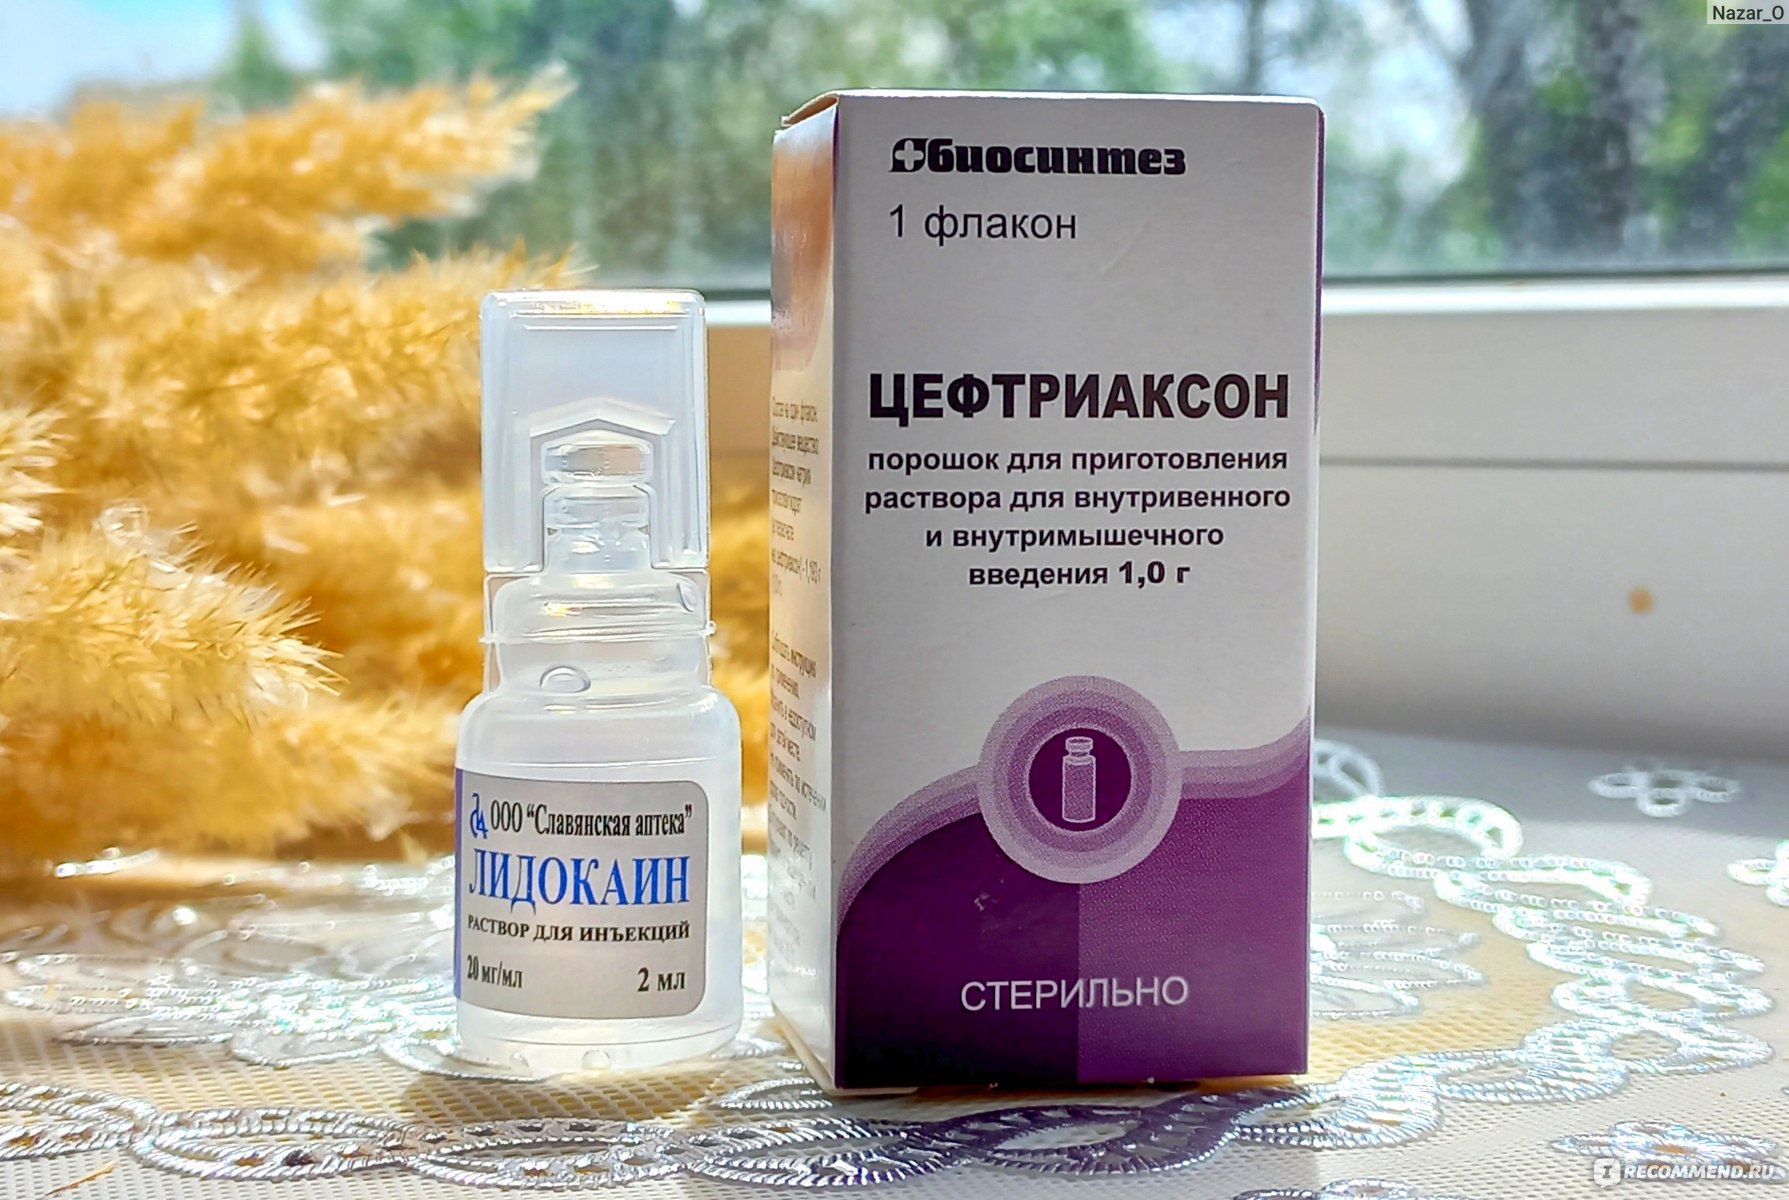 Антибиотики ОАО "Биосинтез" Цефтриаксон